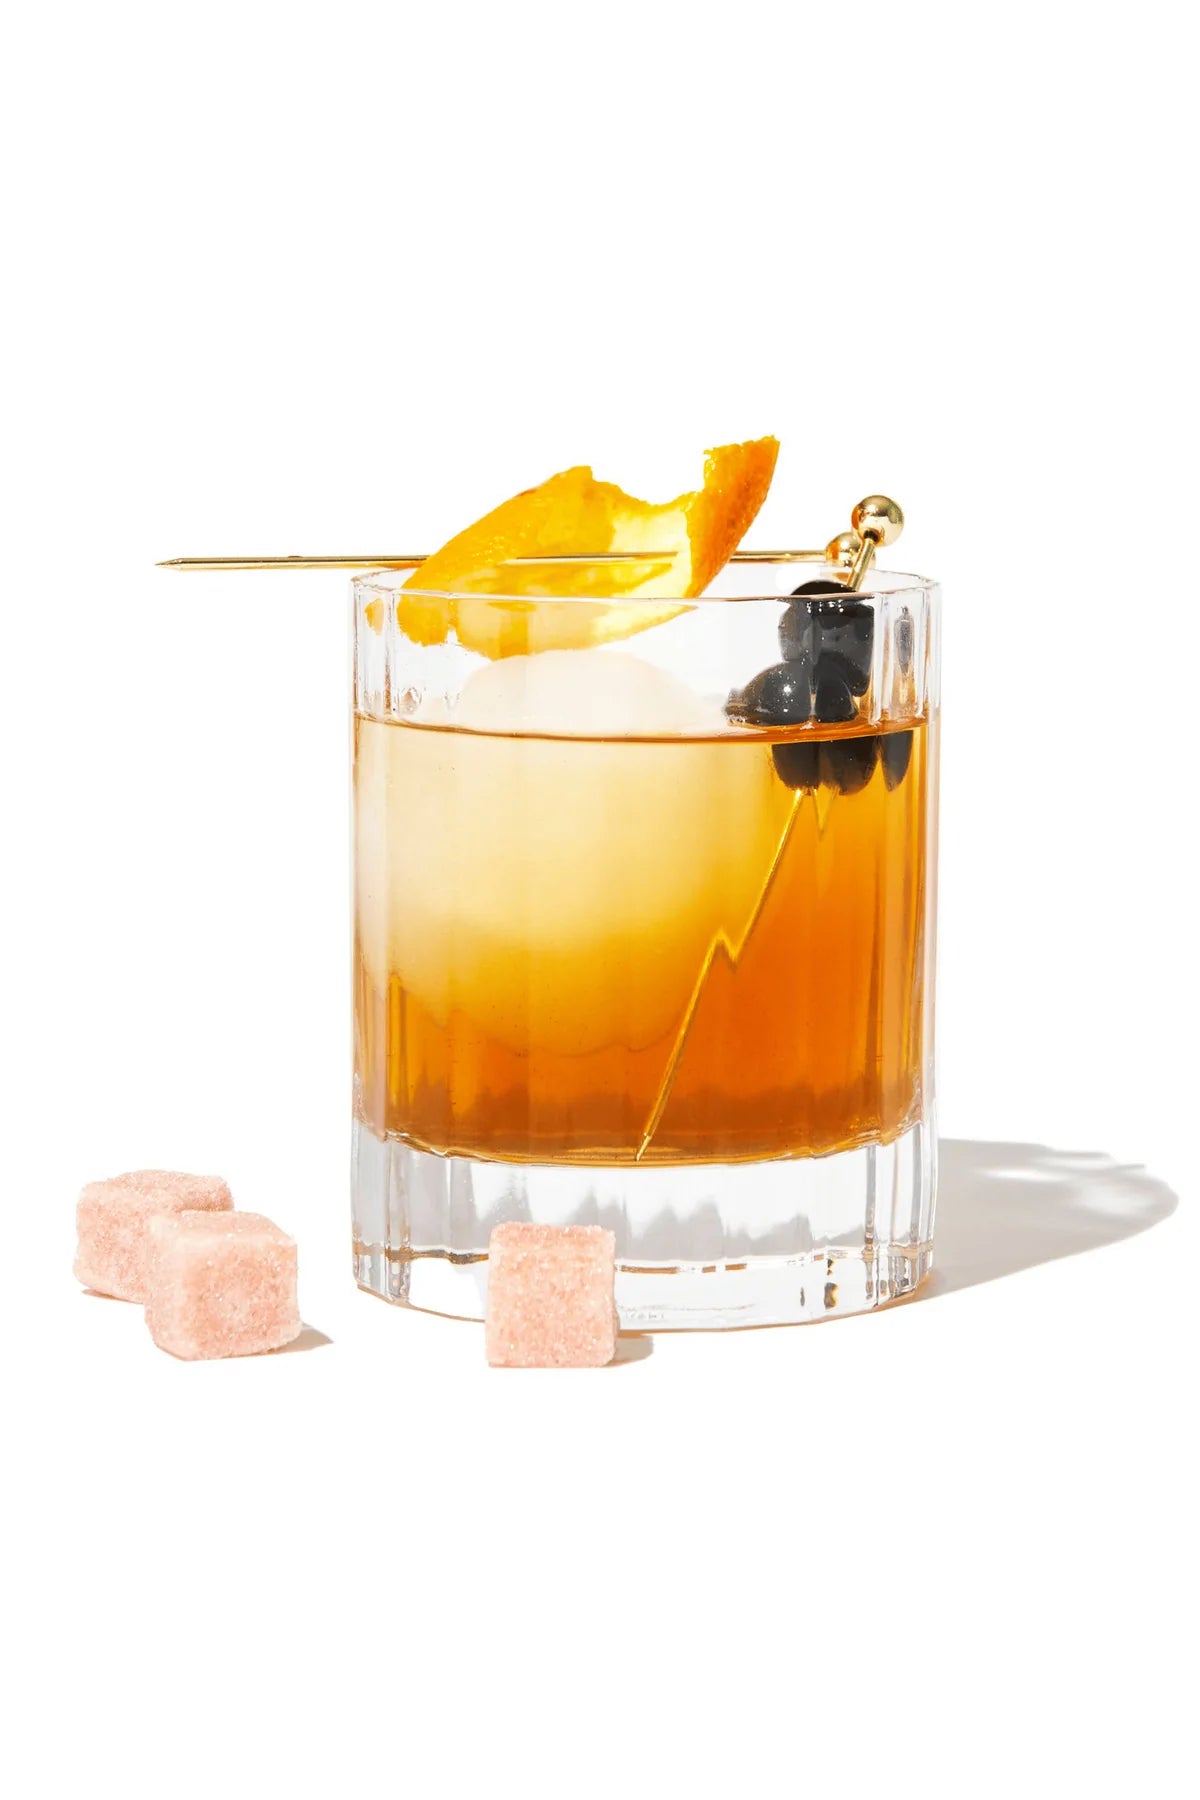 Teaspressa Old Fashioned Cocktail Mixology Cubes